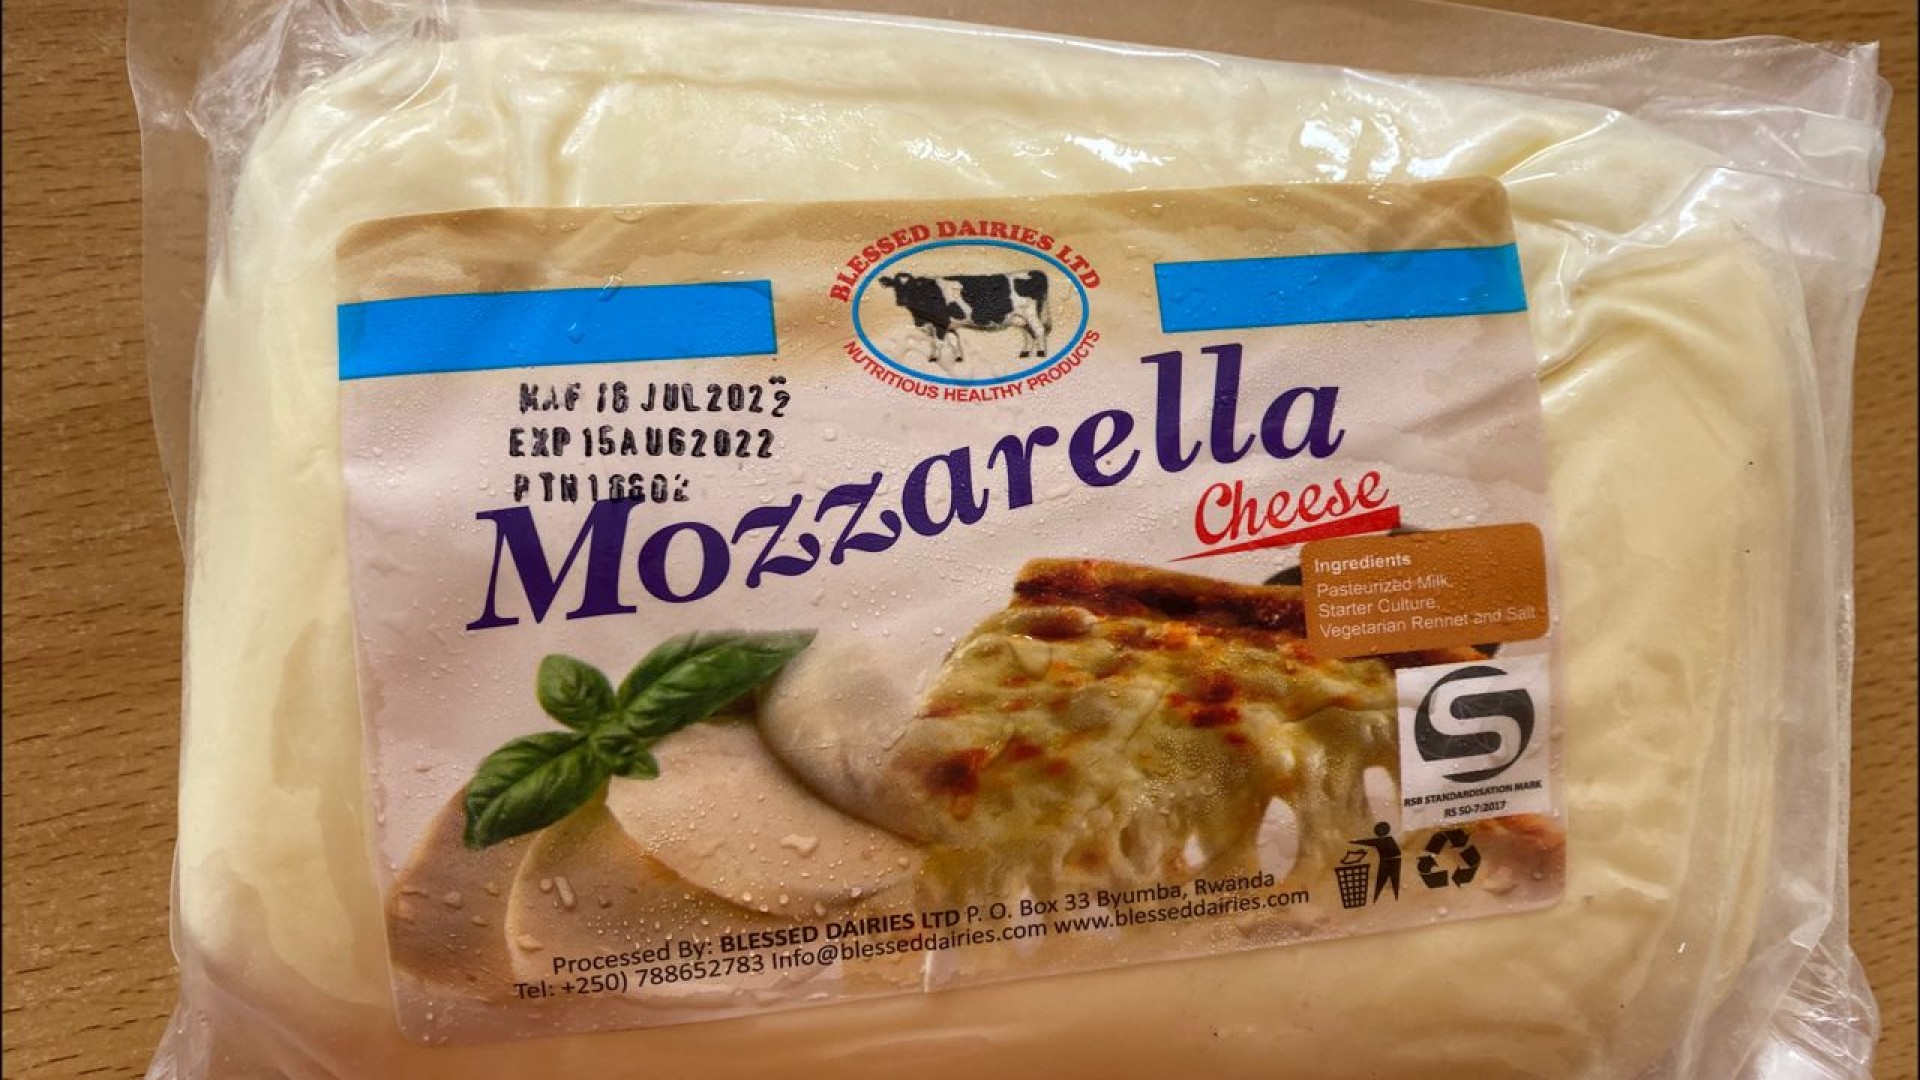 Mozzarella Cheese Blessed dairies kind